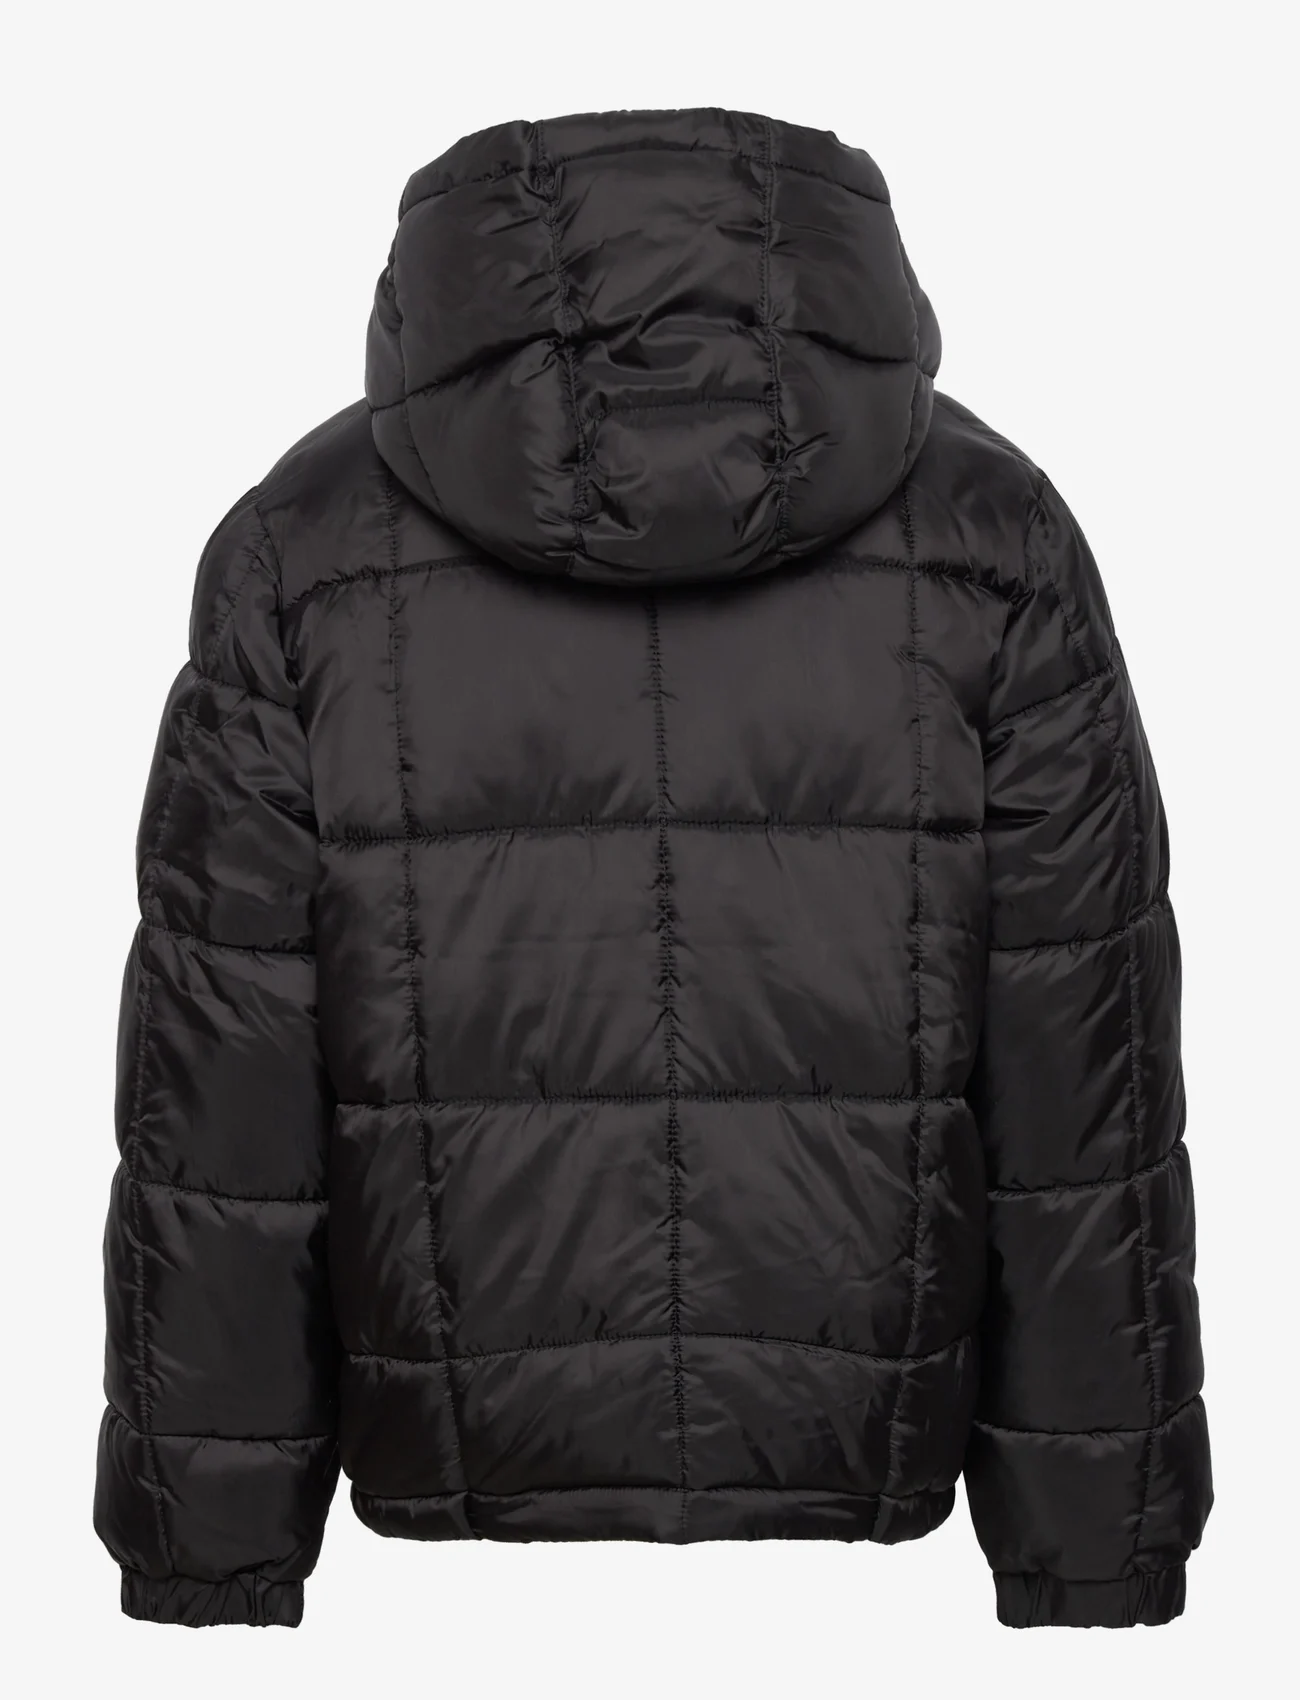 Levi's - Levi's® Reversible Puffer Jacket - donsjacks & gevoerde jassen - black - 1